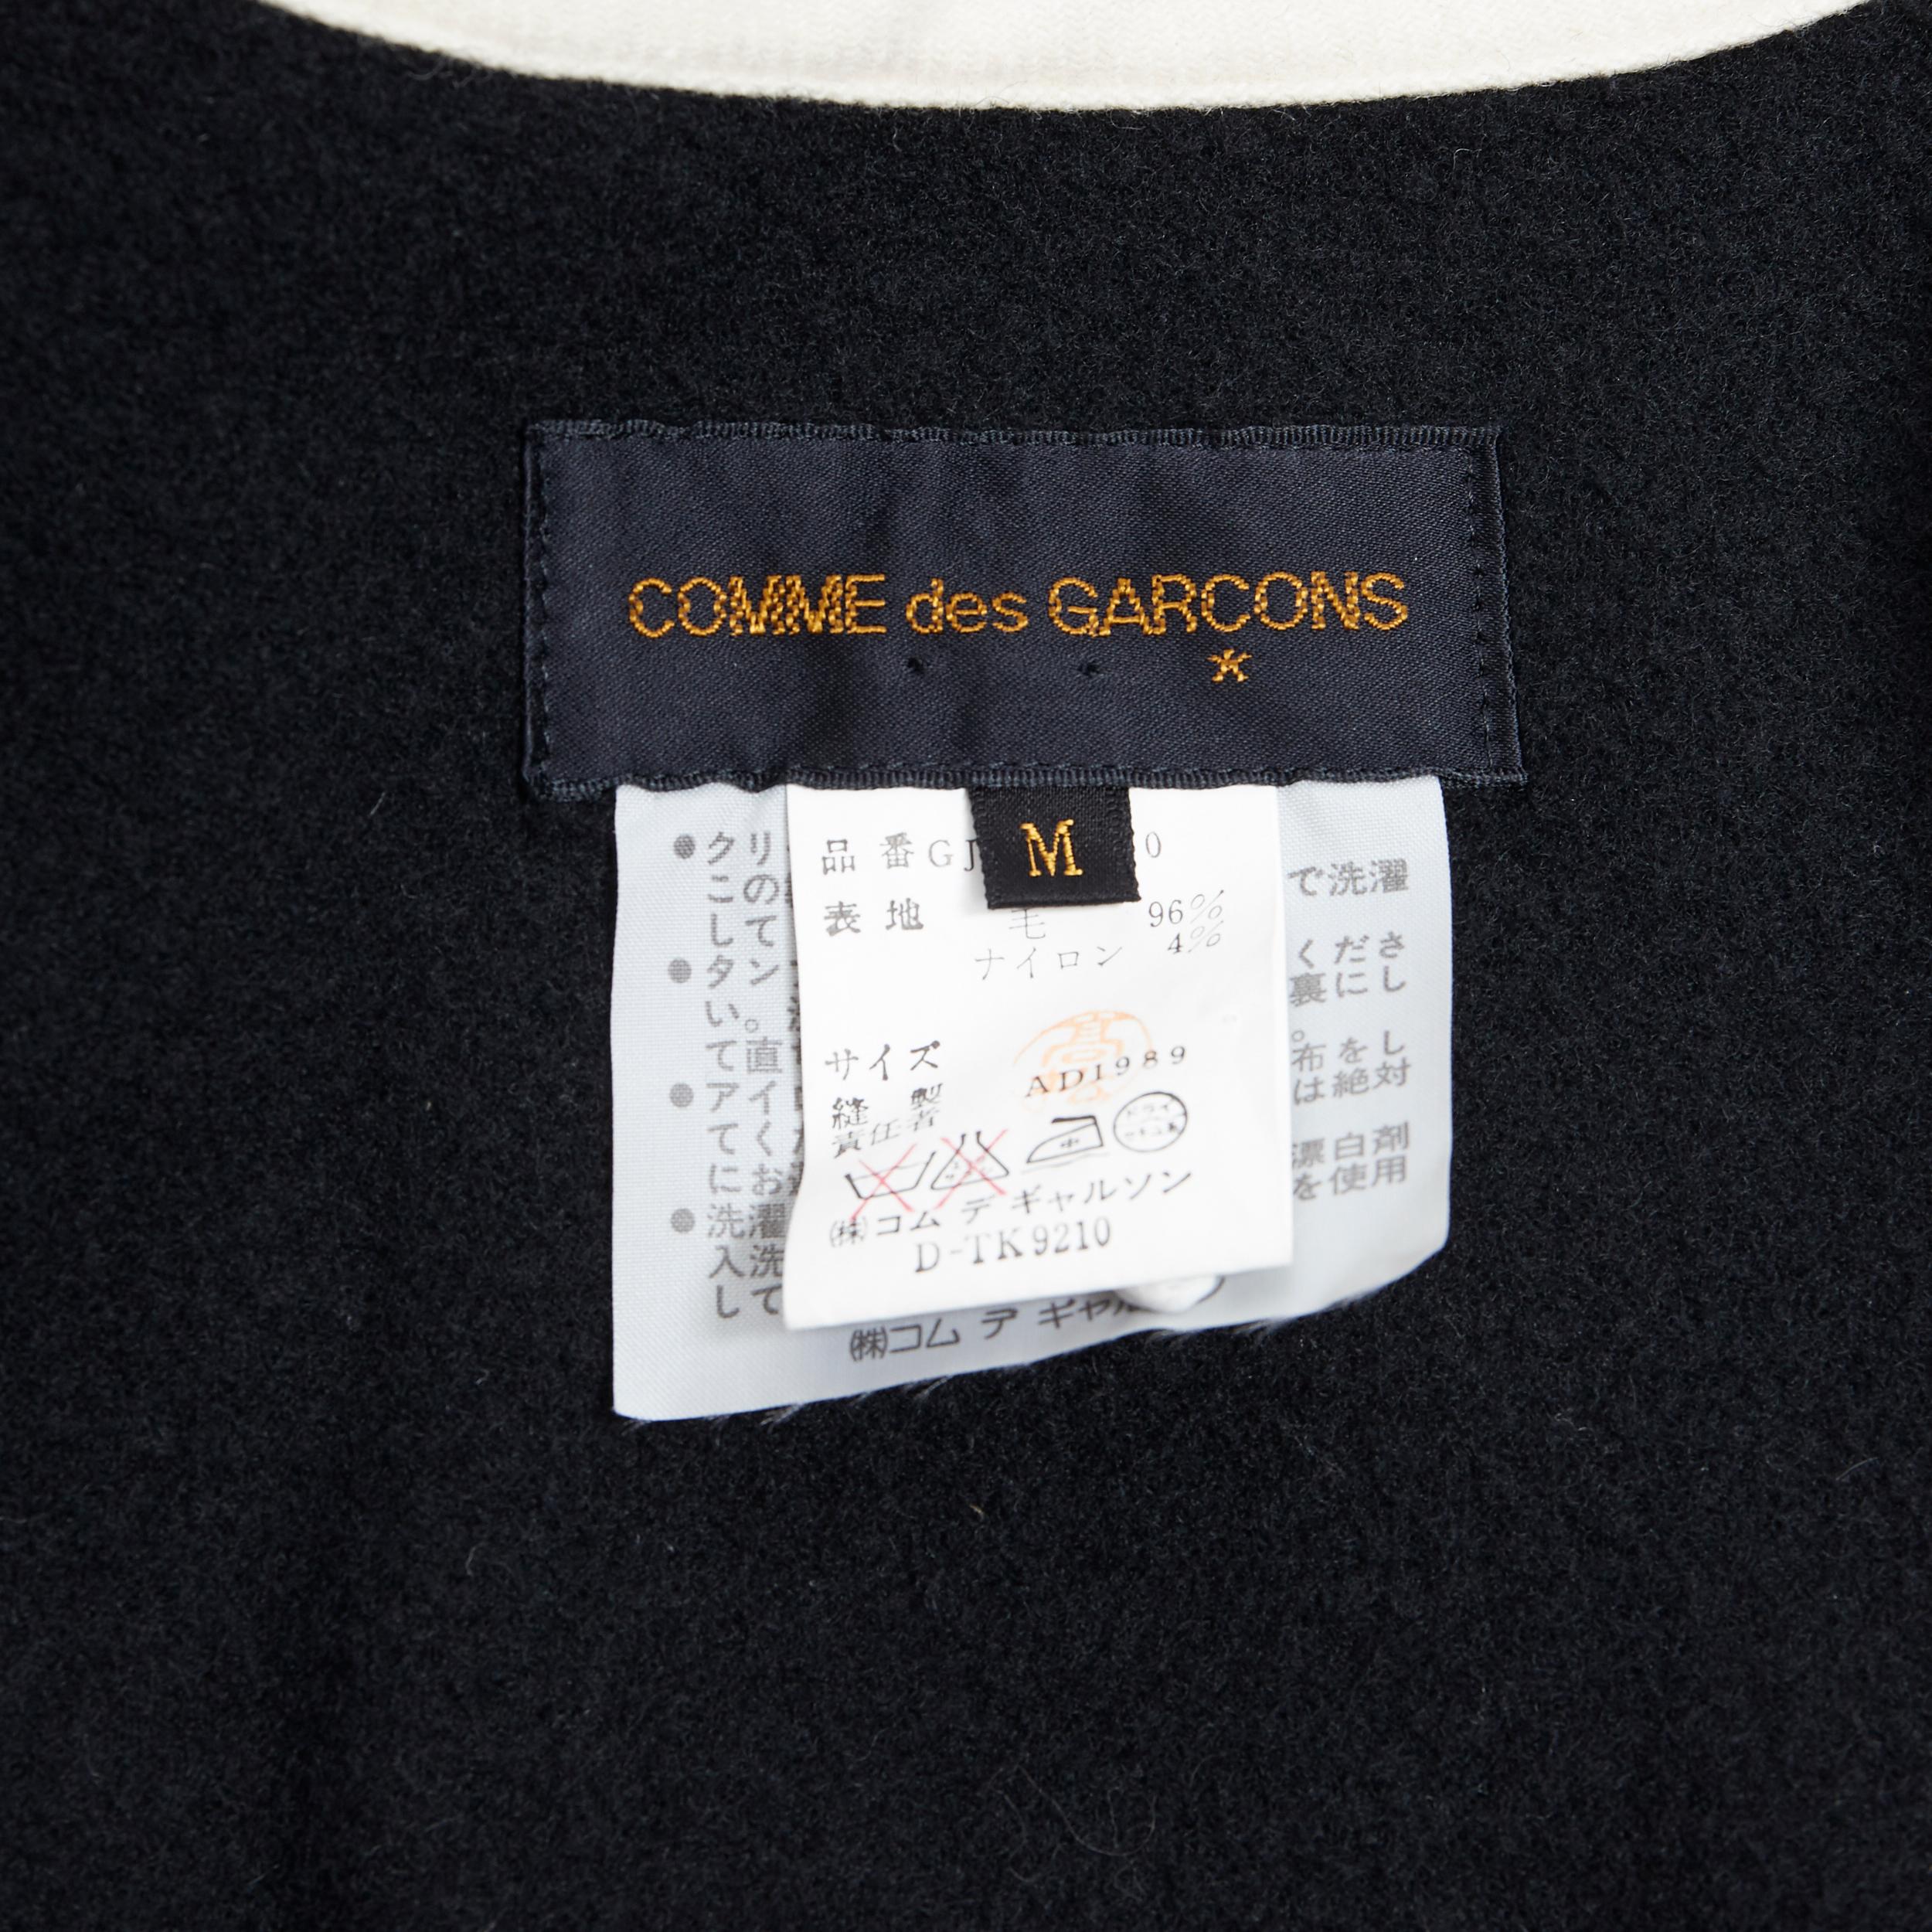 vintage COMME DES GARCONS 1989 Runway black white trimmed cape poncho jacket M 6